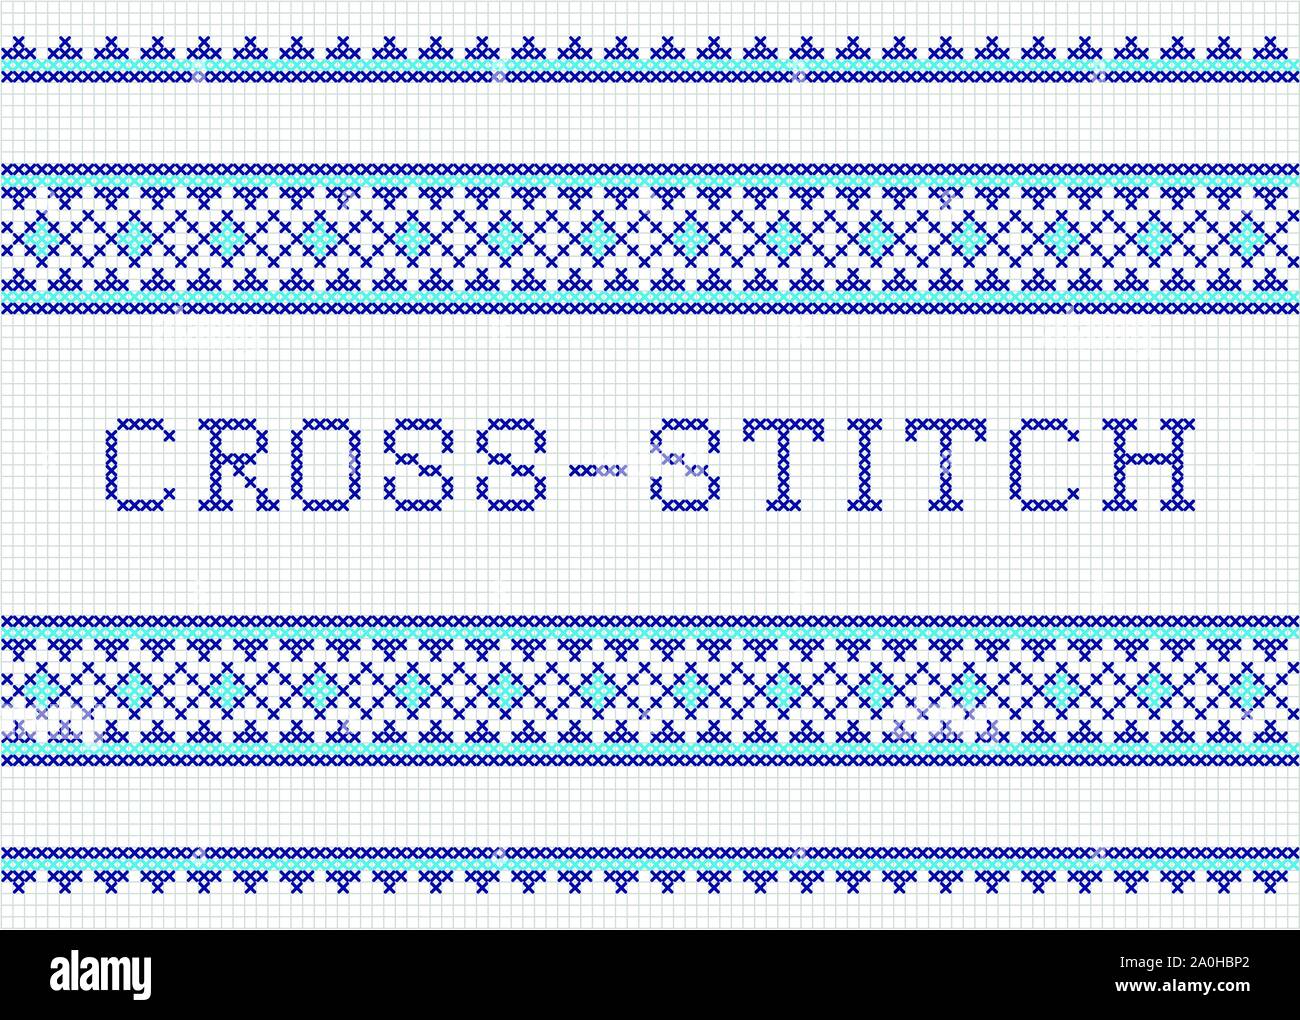 Ray Charles Cross Stitch Chart/Pattern/Design/XStitch 